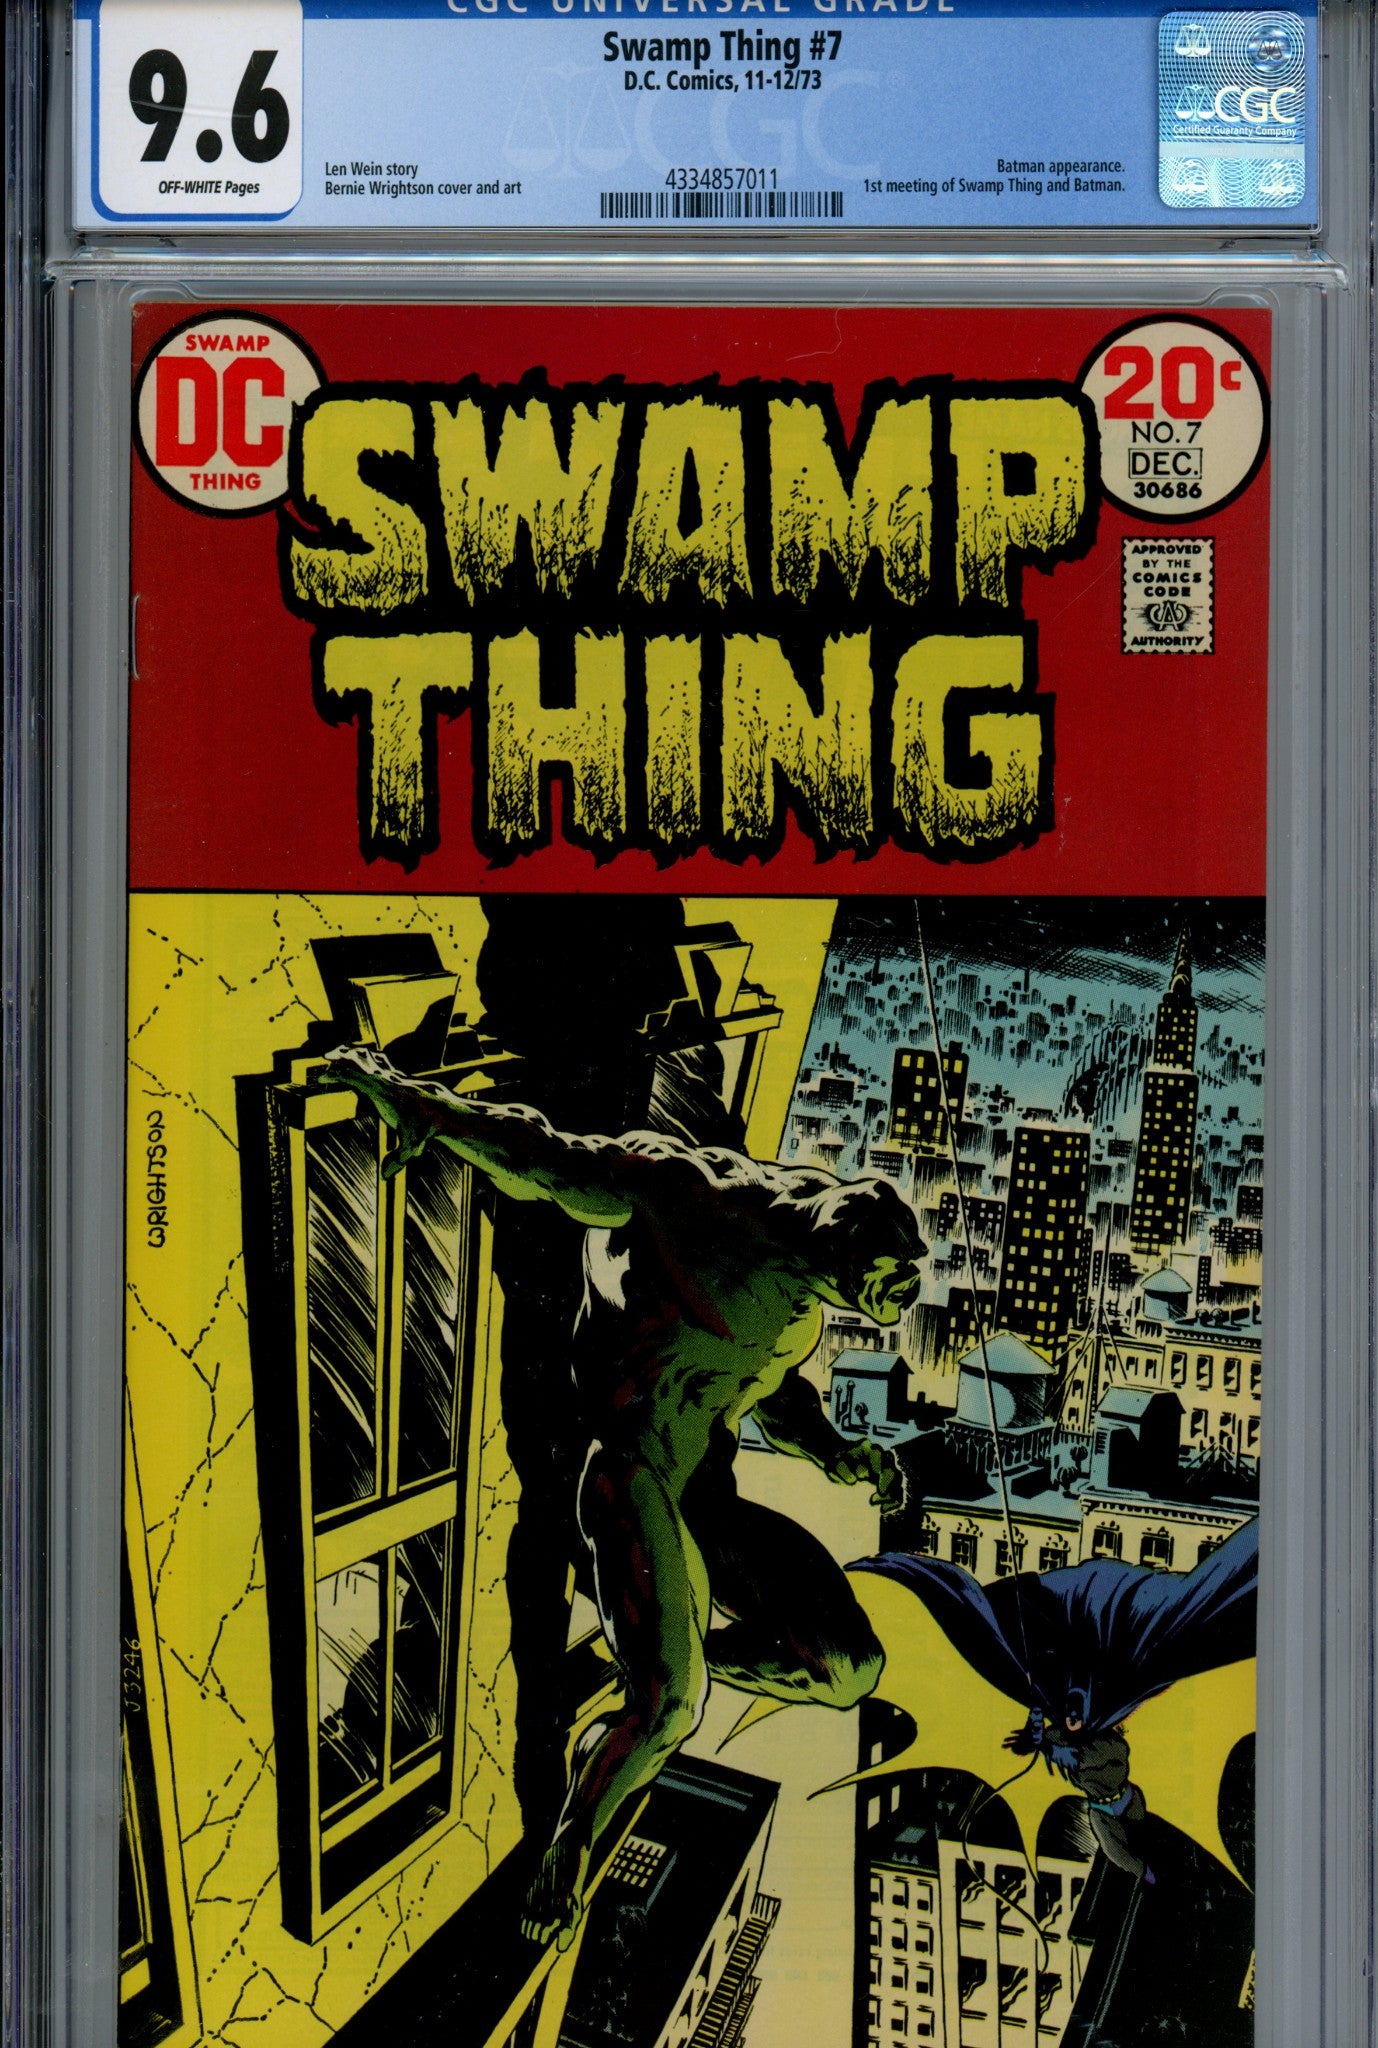 Swamp Thing Vol 1 7 CGC 9.6 (NM+) (1973) 